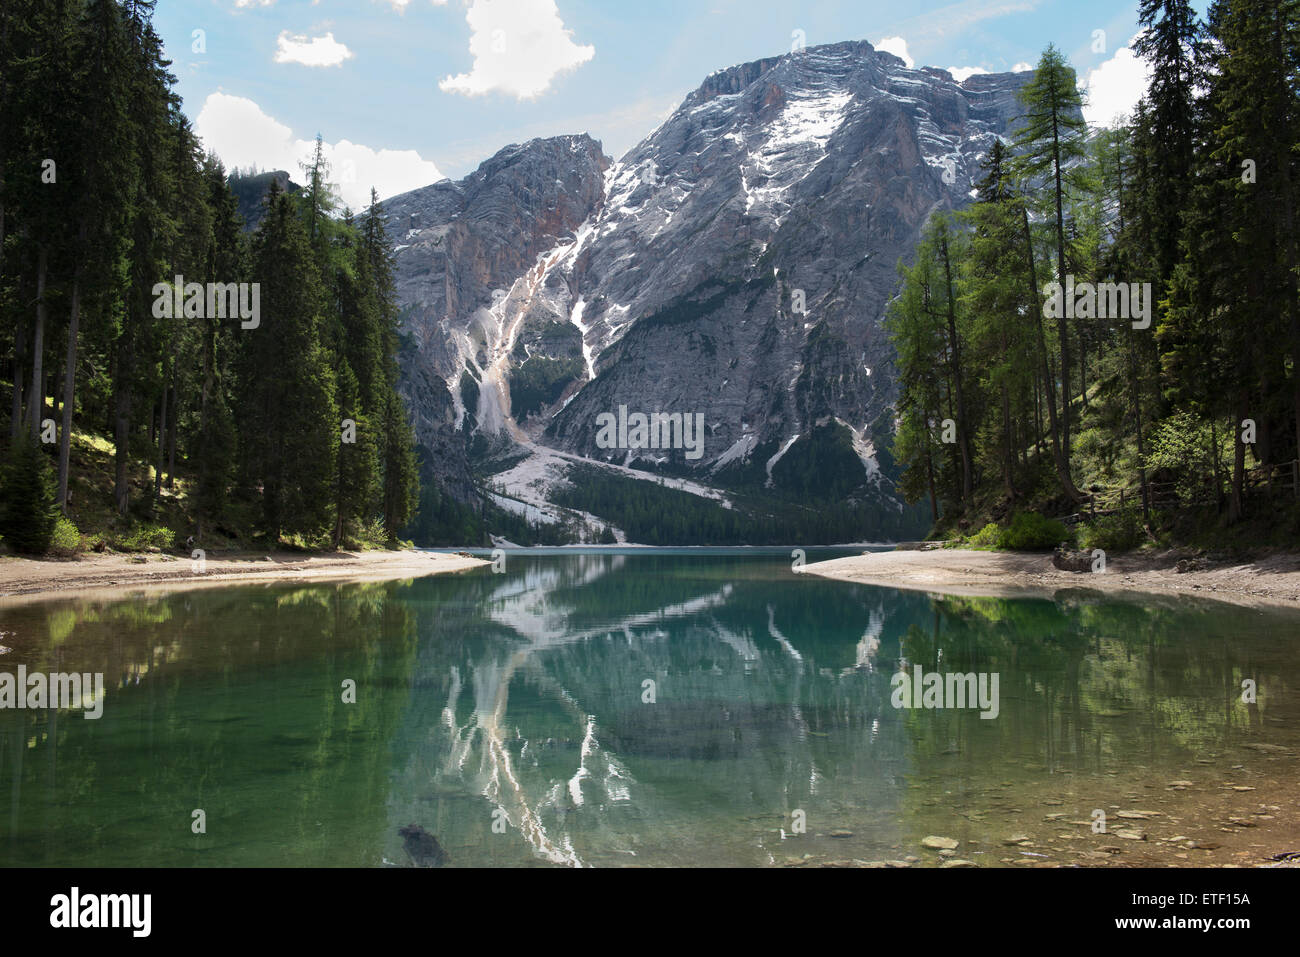 Pragser Wildsee, Lago di Braies, Puster Valley, South Tyrol, Italy Stock Photo